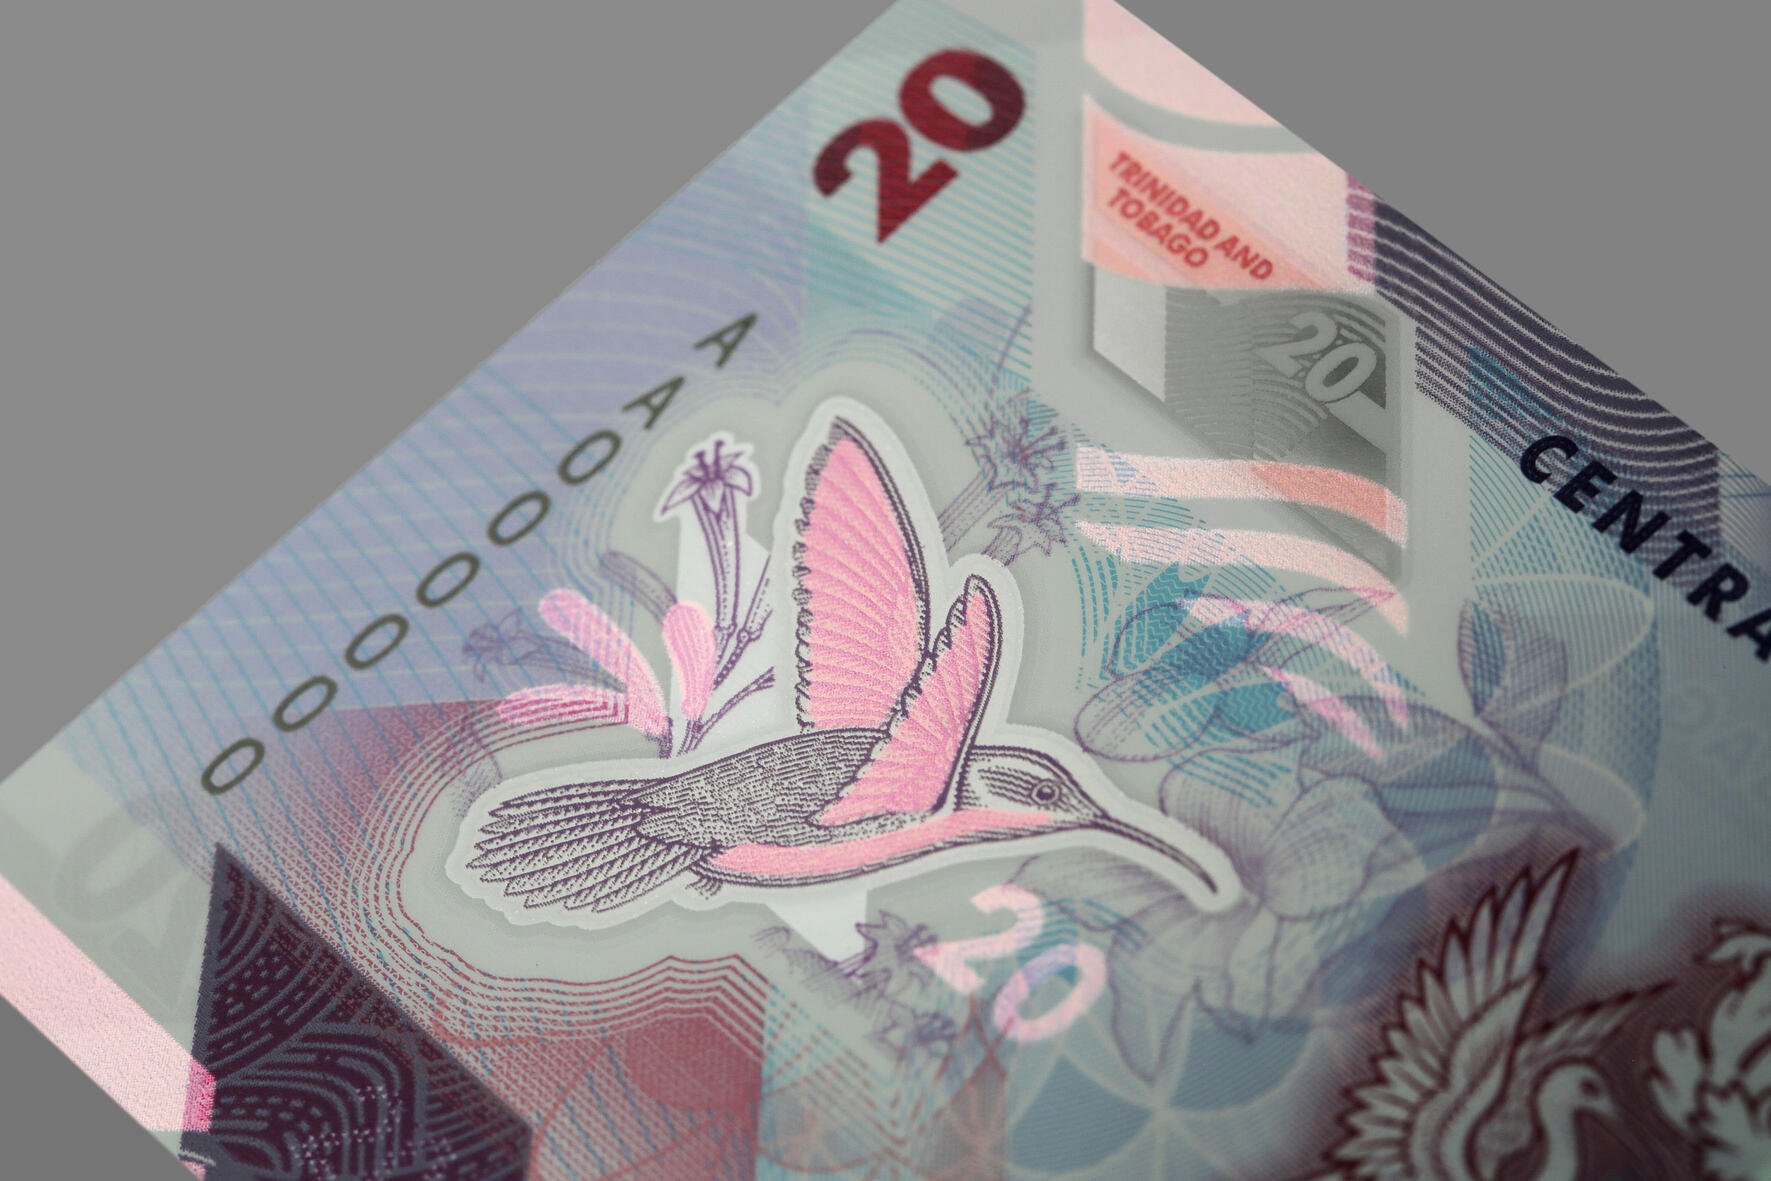 Trinidad & Tobago Launches Further Polymer Banknote Denominations